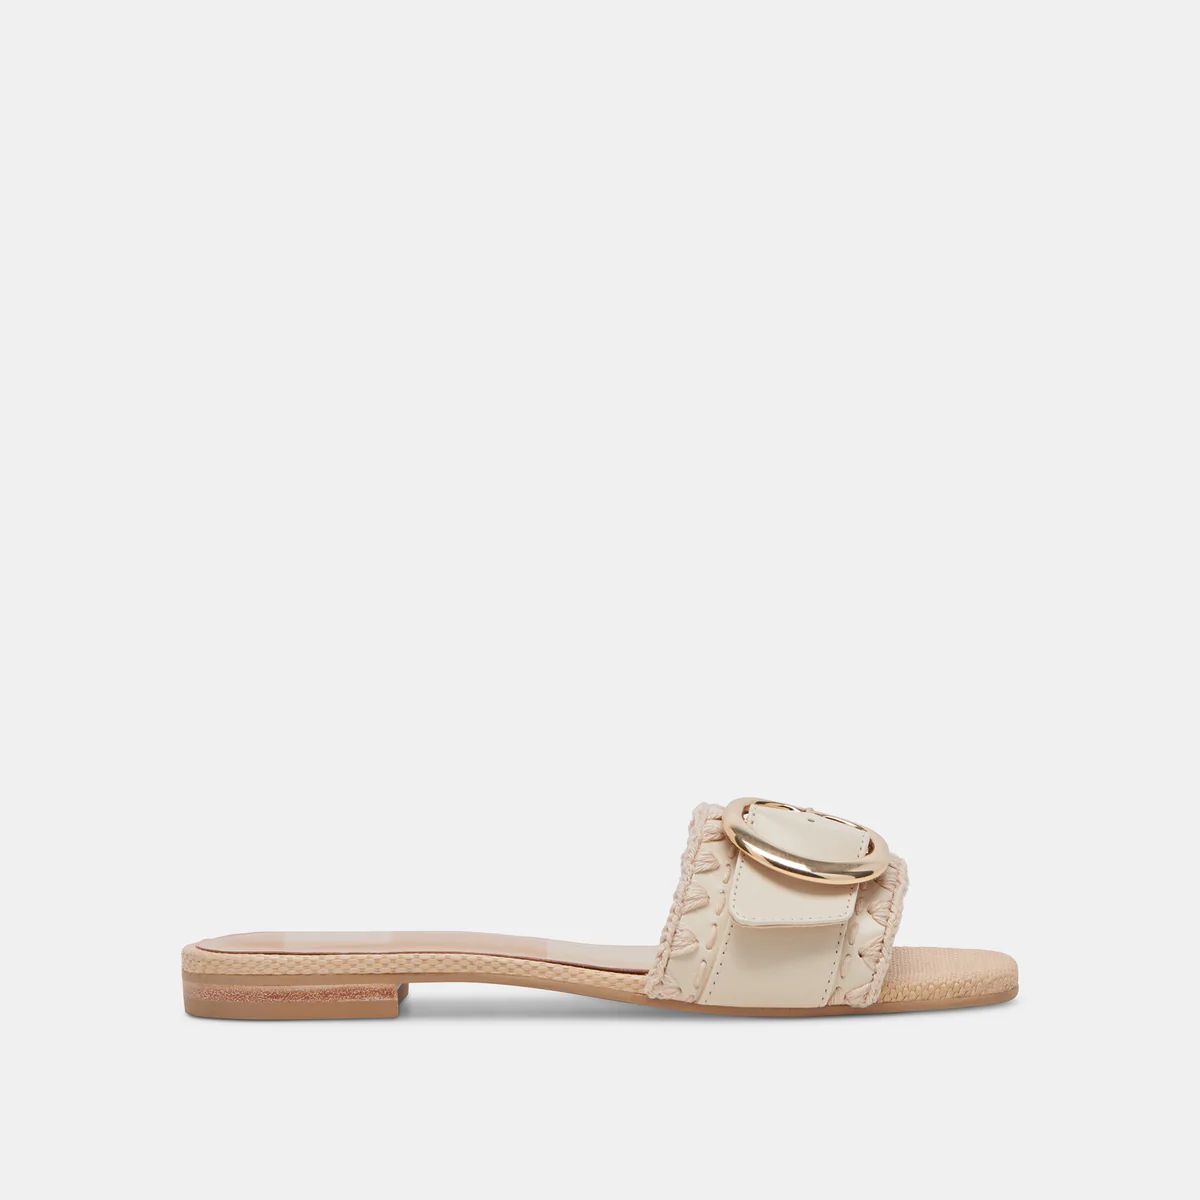 Grecia Sandals Leather | DolceVita.com